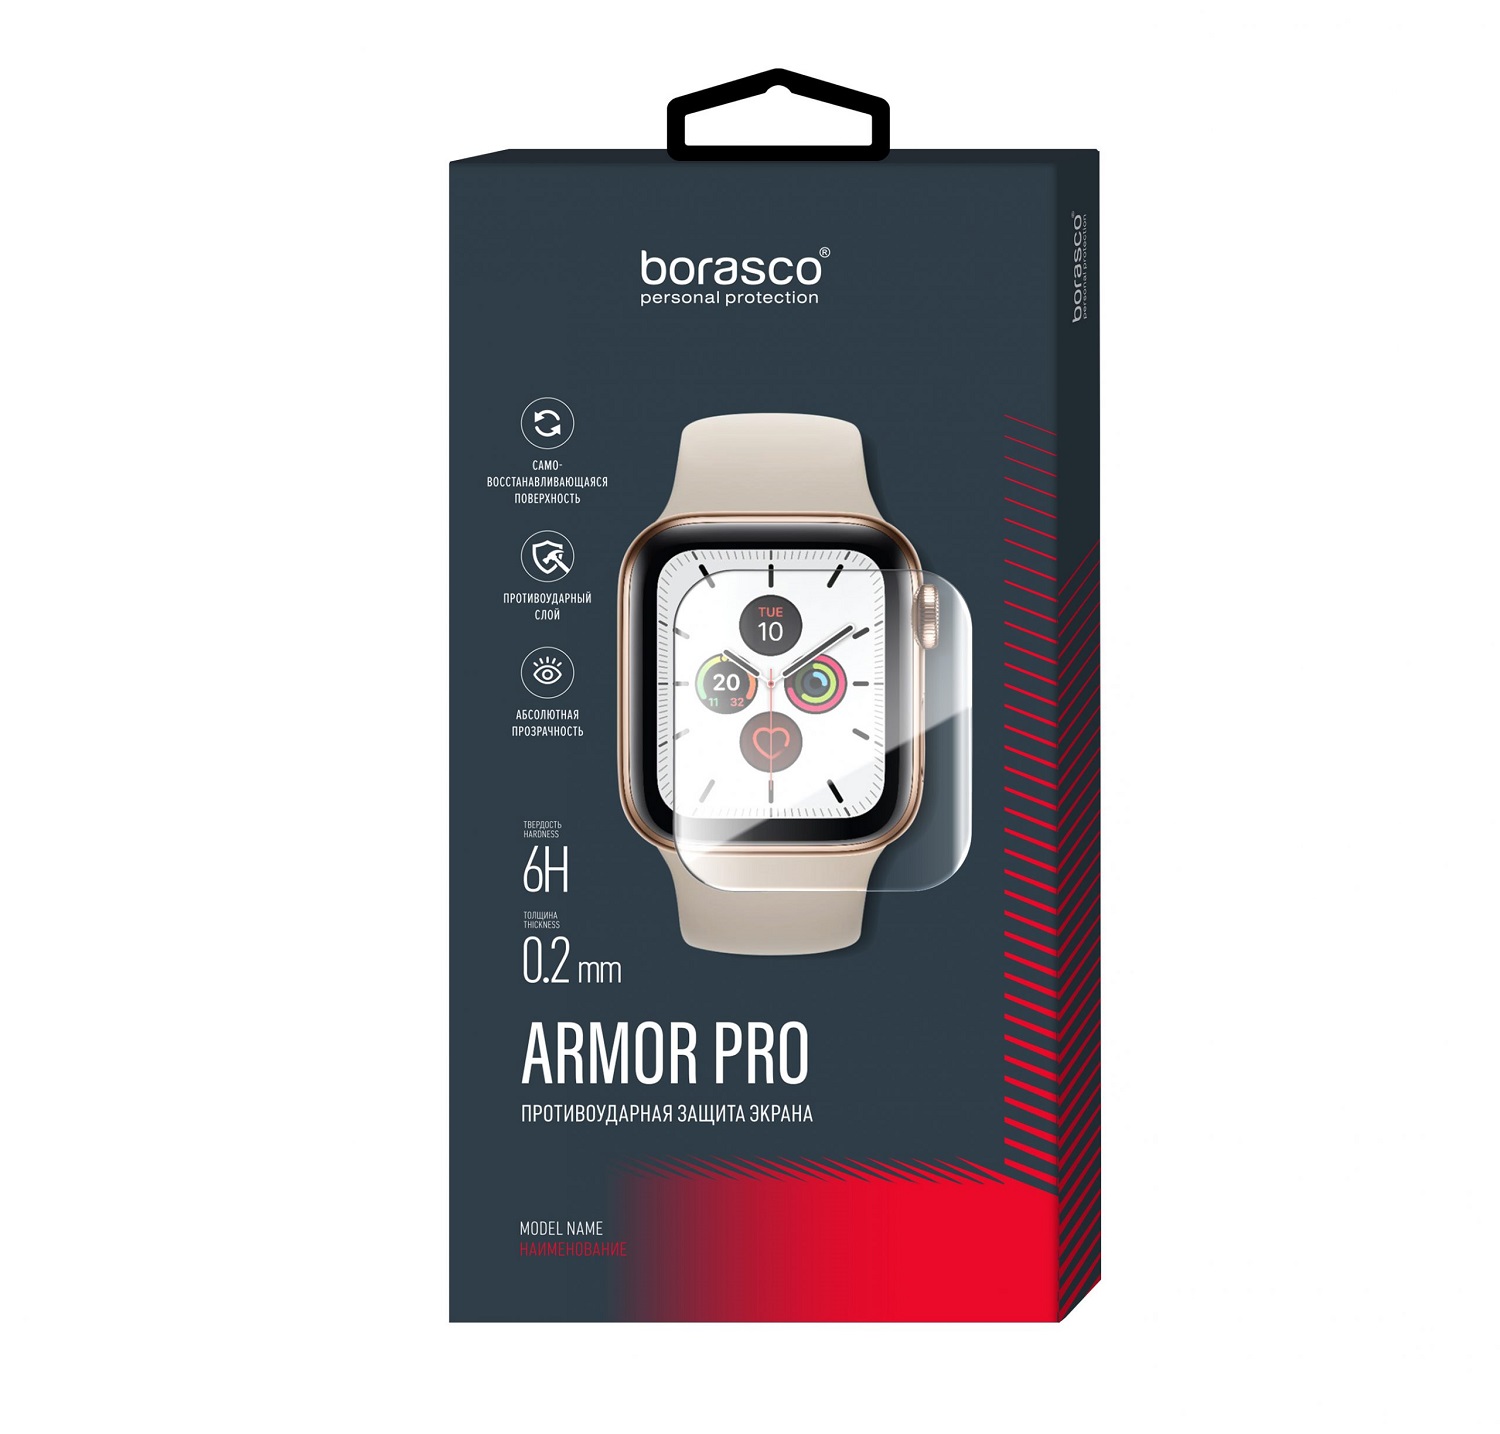 Защита экрана BoraSCO Armor Pro для Xiaomi Mi Watch Lite защита экрана borasco armor pro для xiaomi mi 9